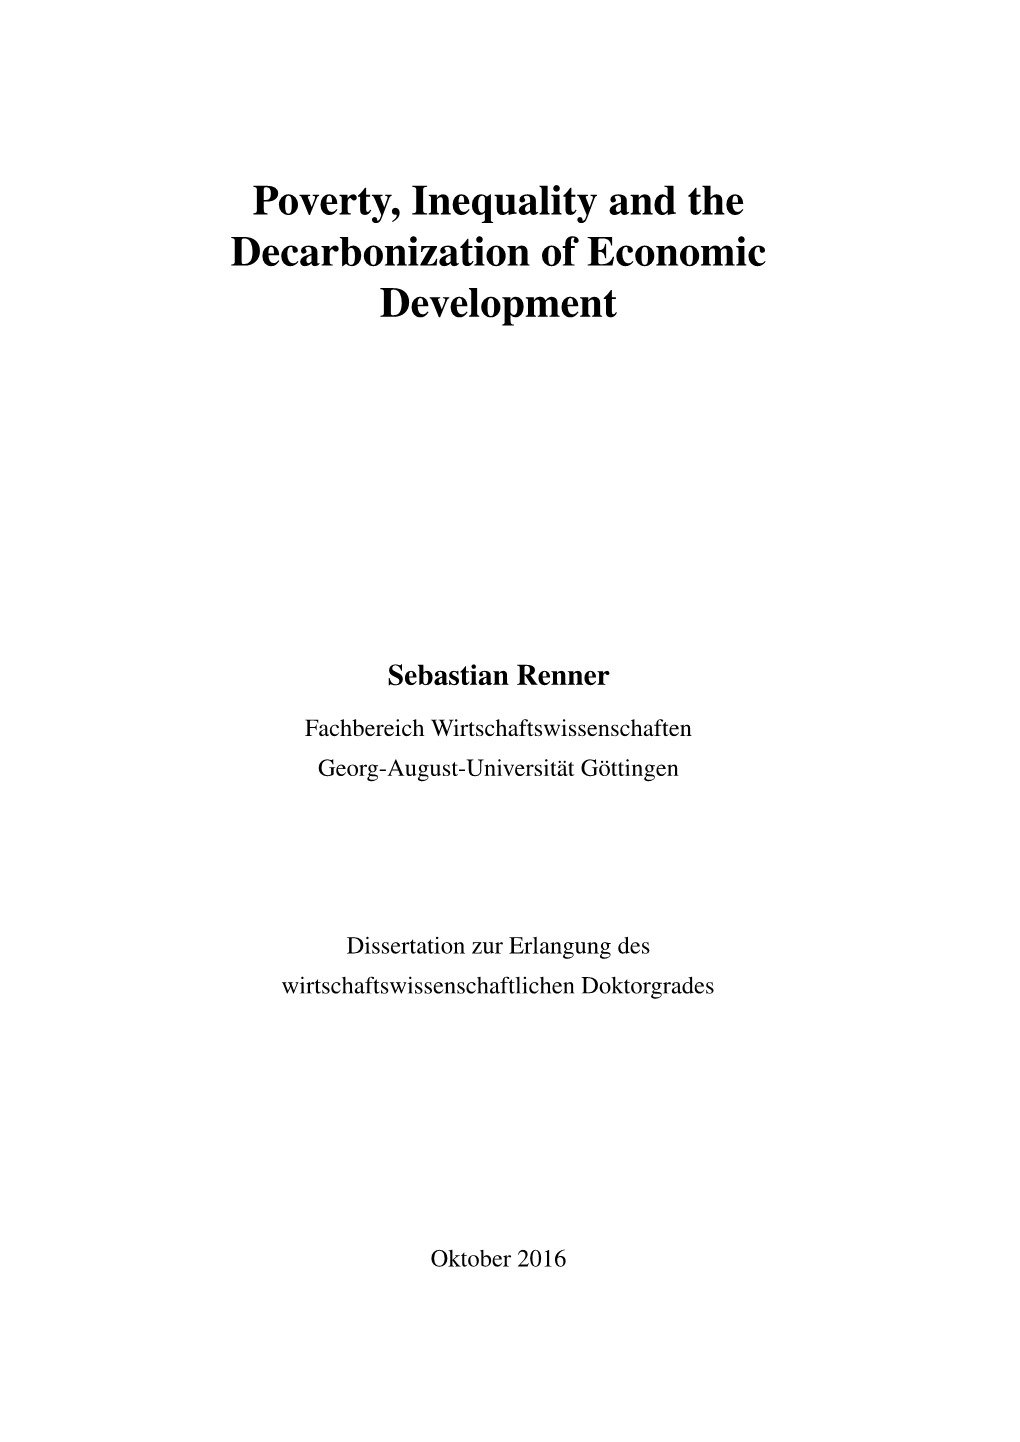 Poverty, Inequality and the Decarbonization of Economic Development